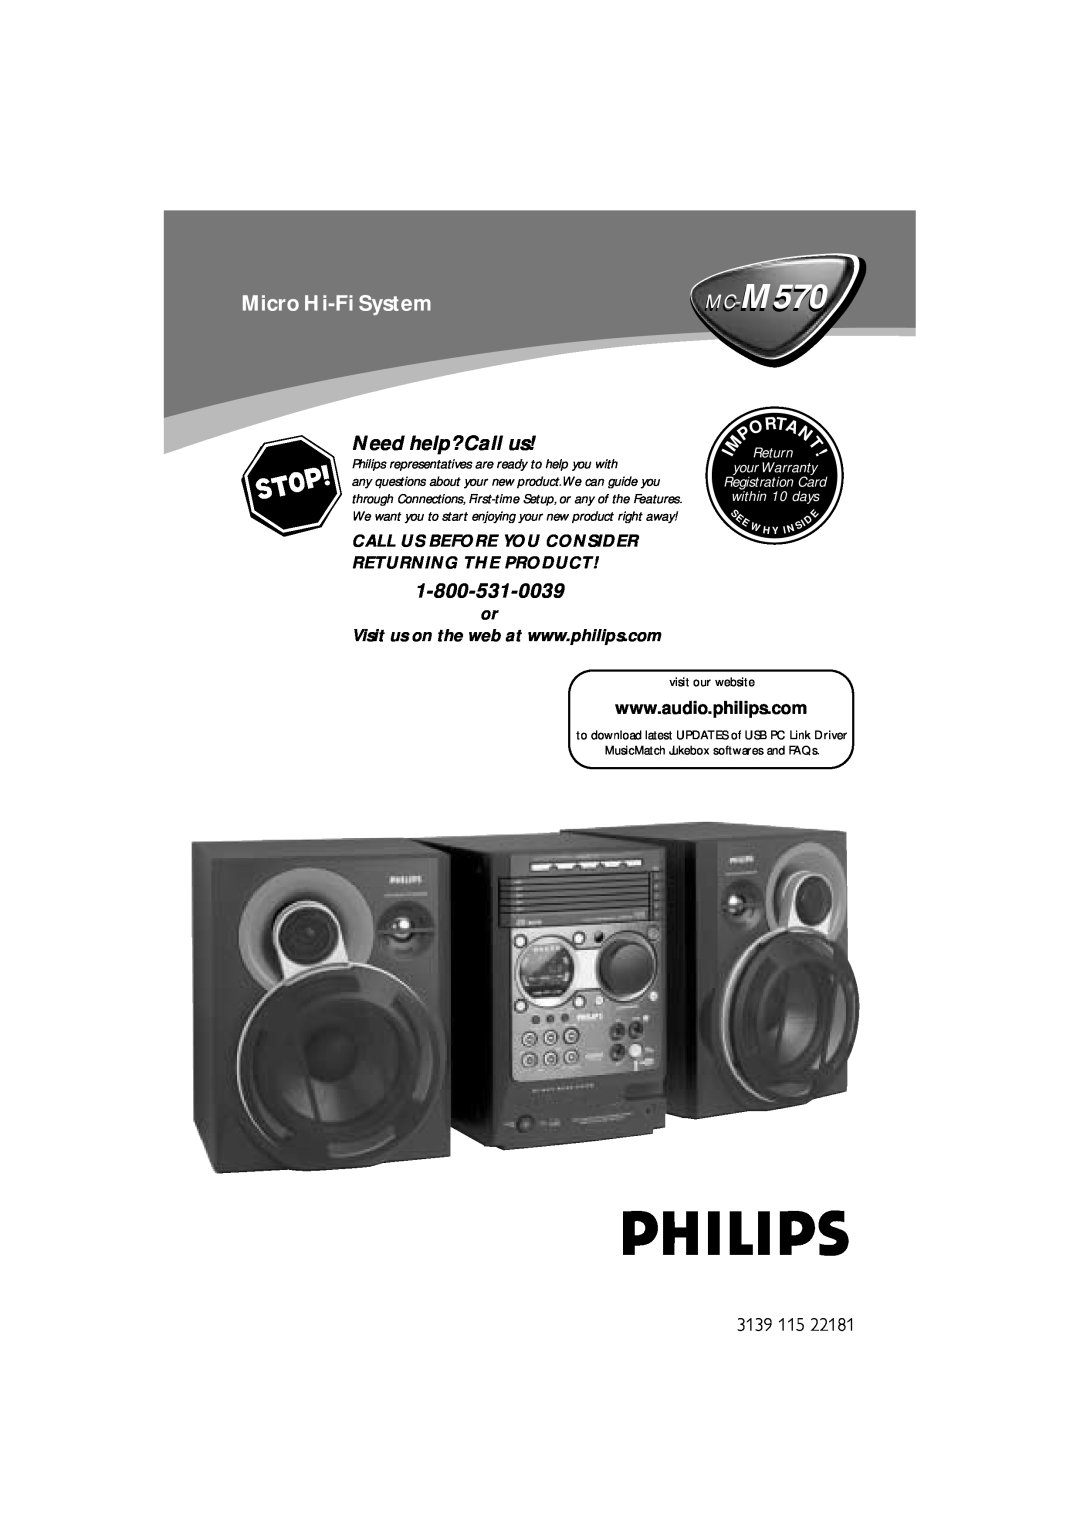 Philips MC-M570/37 warranty Need help? Call us, MC--M570, Micro Hi-FiSystem, Return, W H Y In 